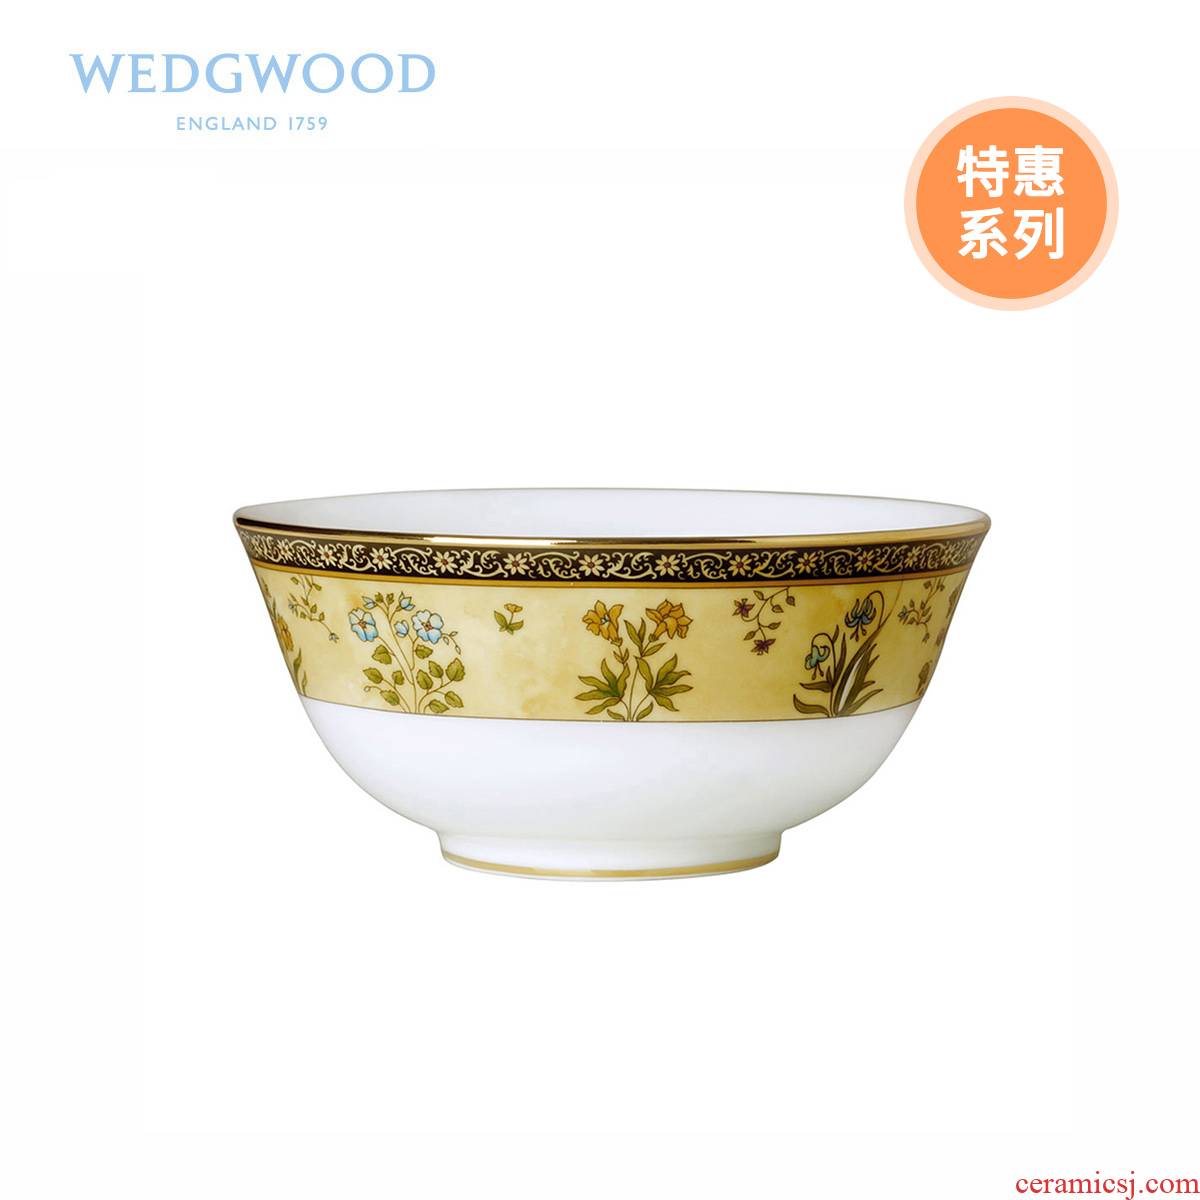 Wedgwood waterford Wedgwood flower of India India 11.5 cm high - grade ipads China rice bowls